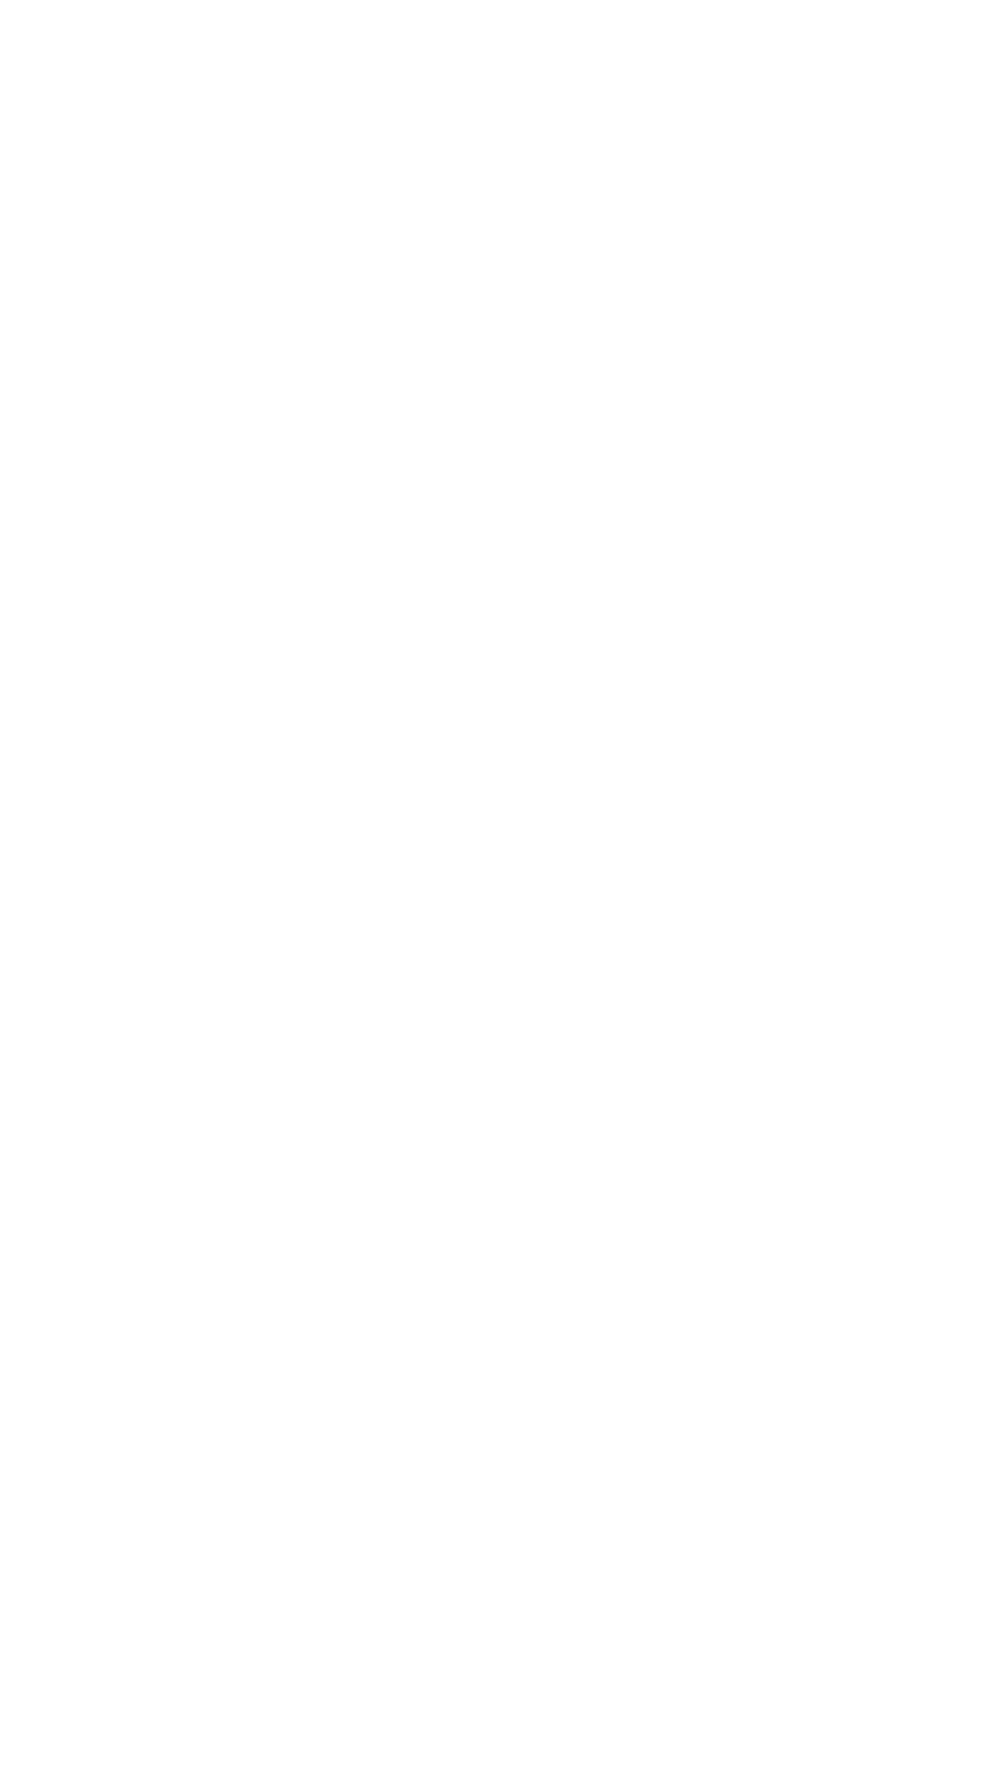 Home page white circle